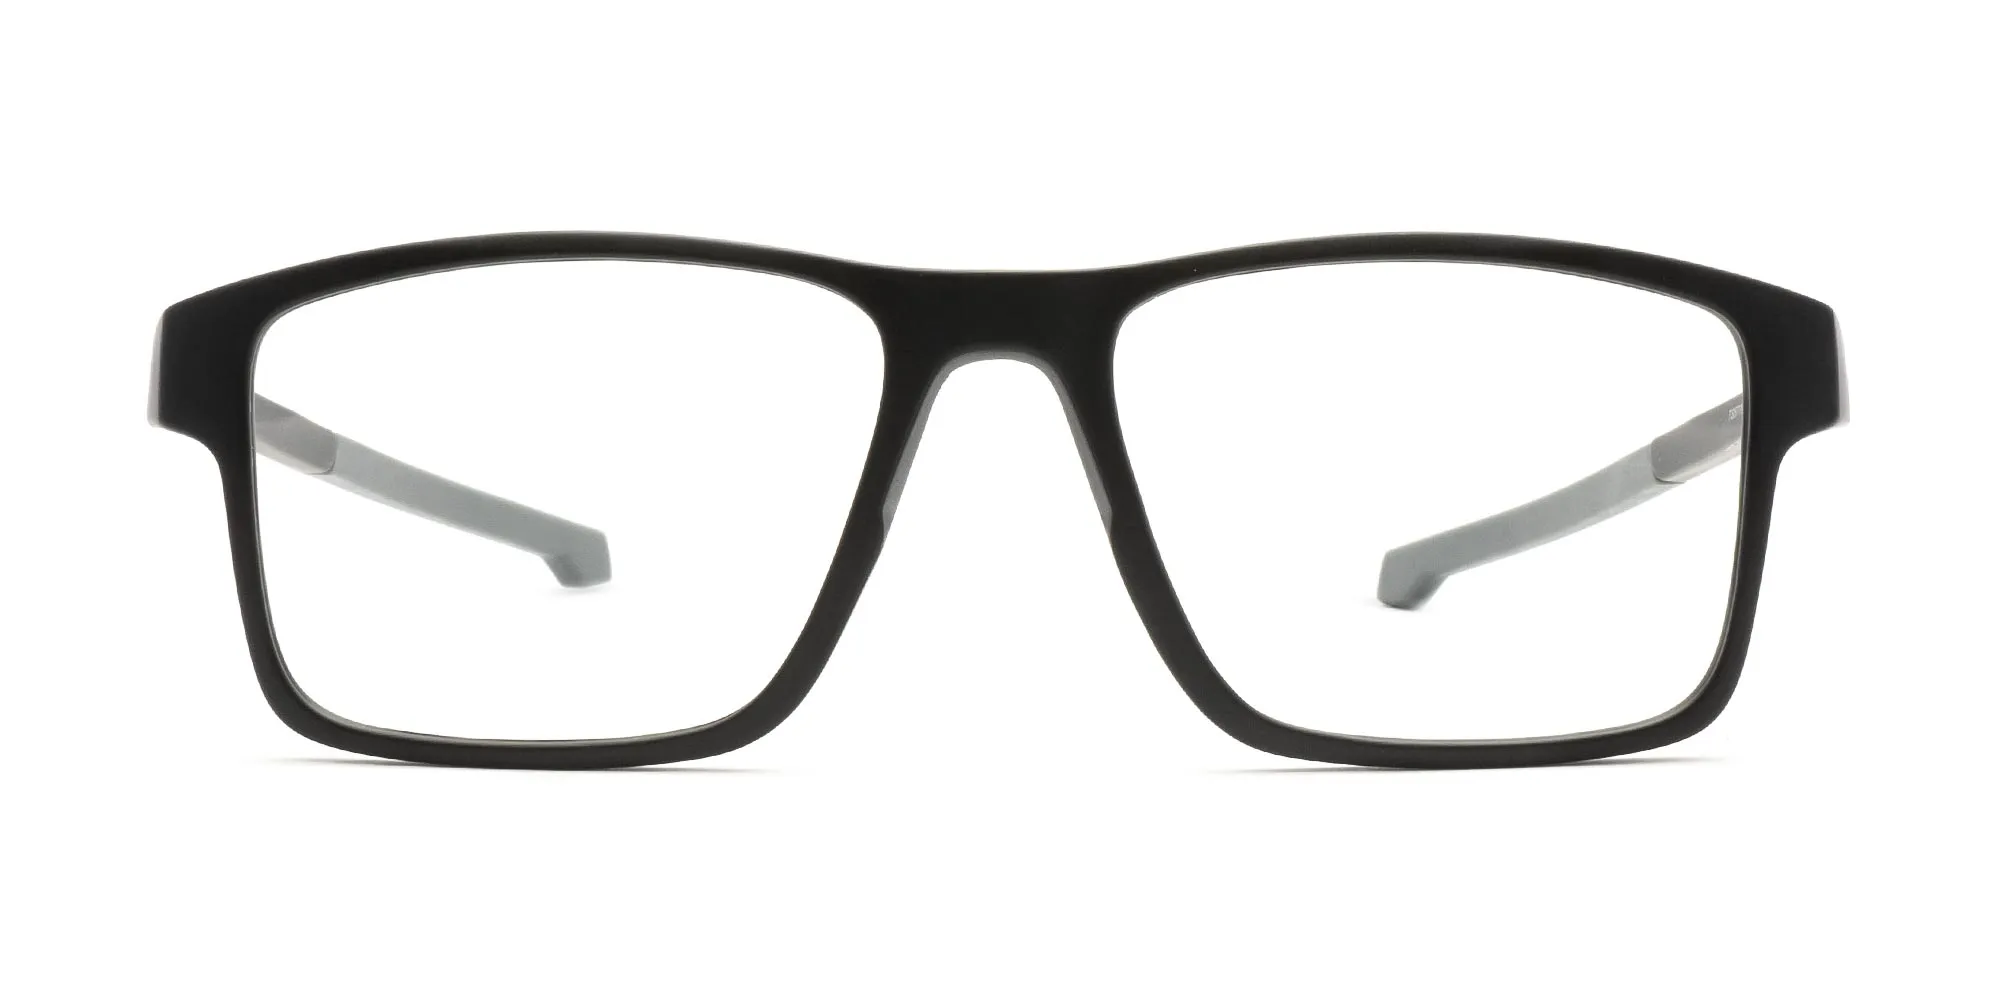 Sports Glasses With Prescription Lenses